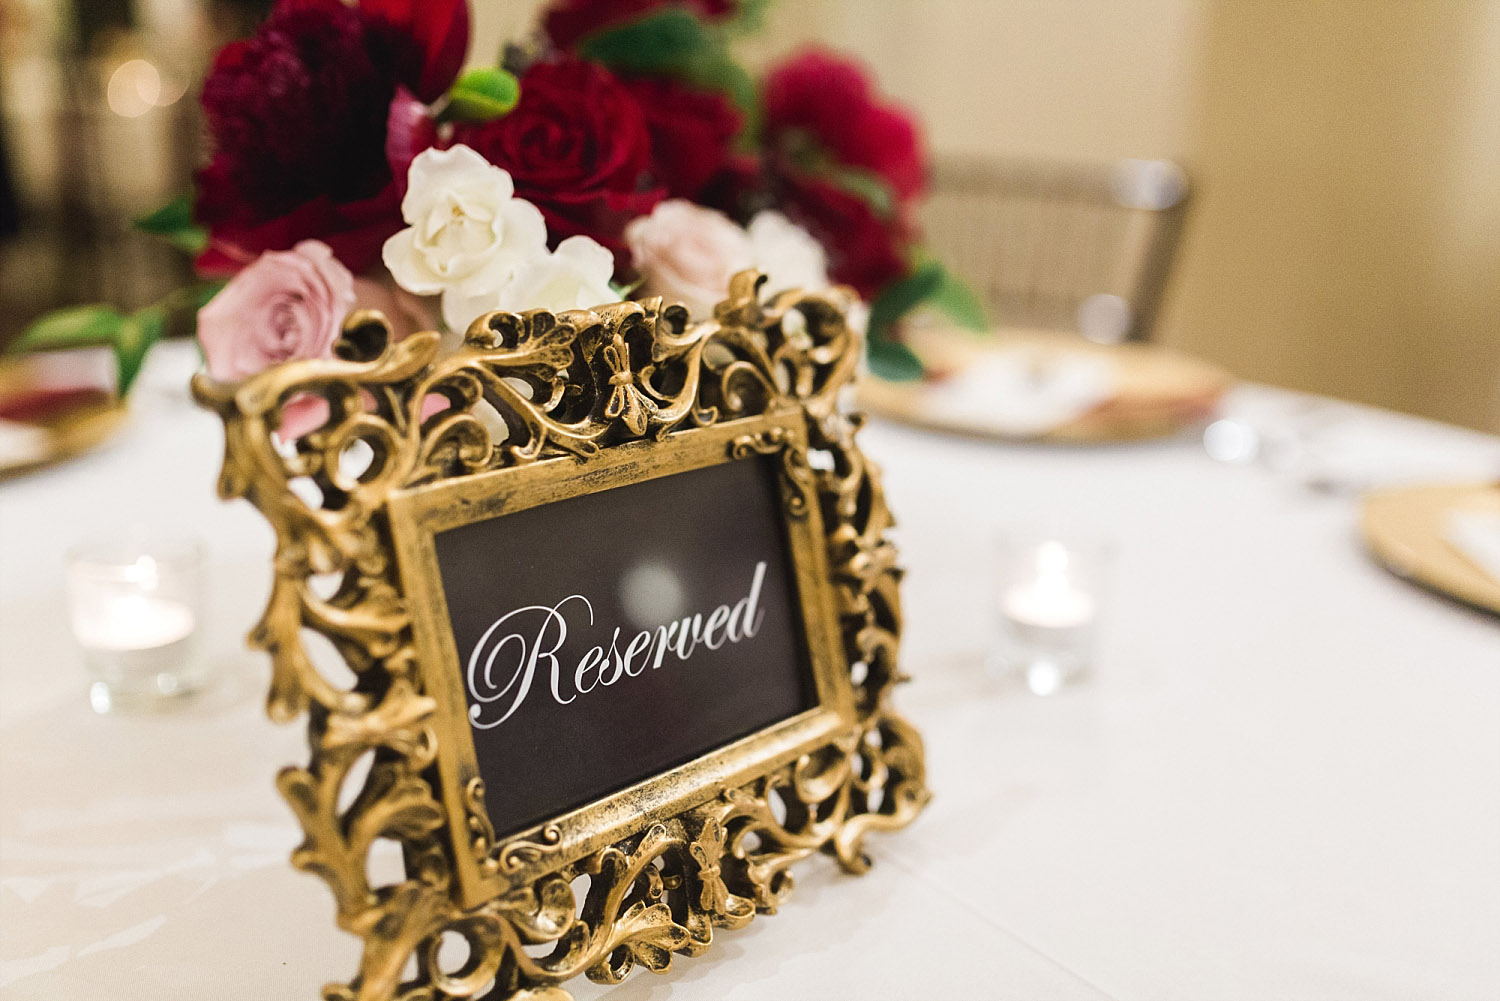 Castle at Rockwall wedding ornate gold frame for reserved tables